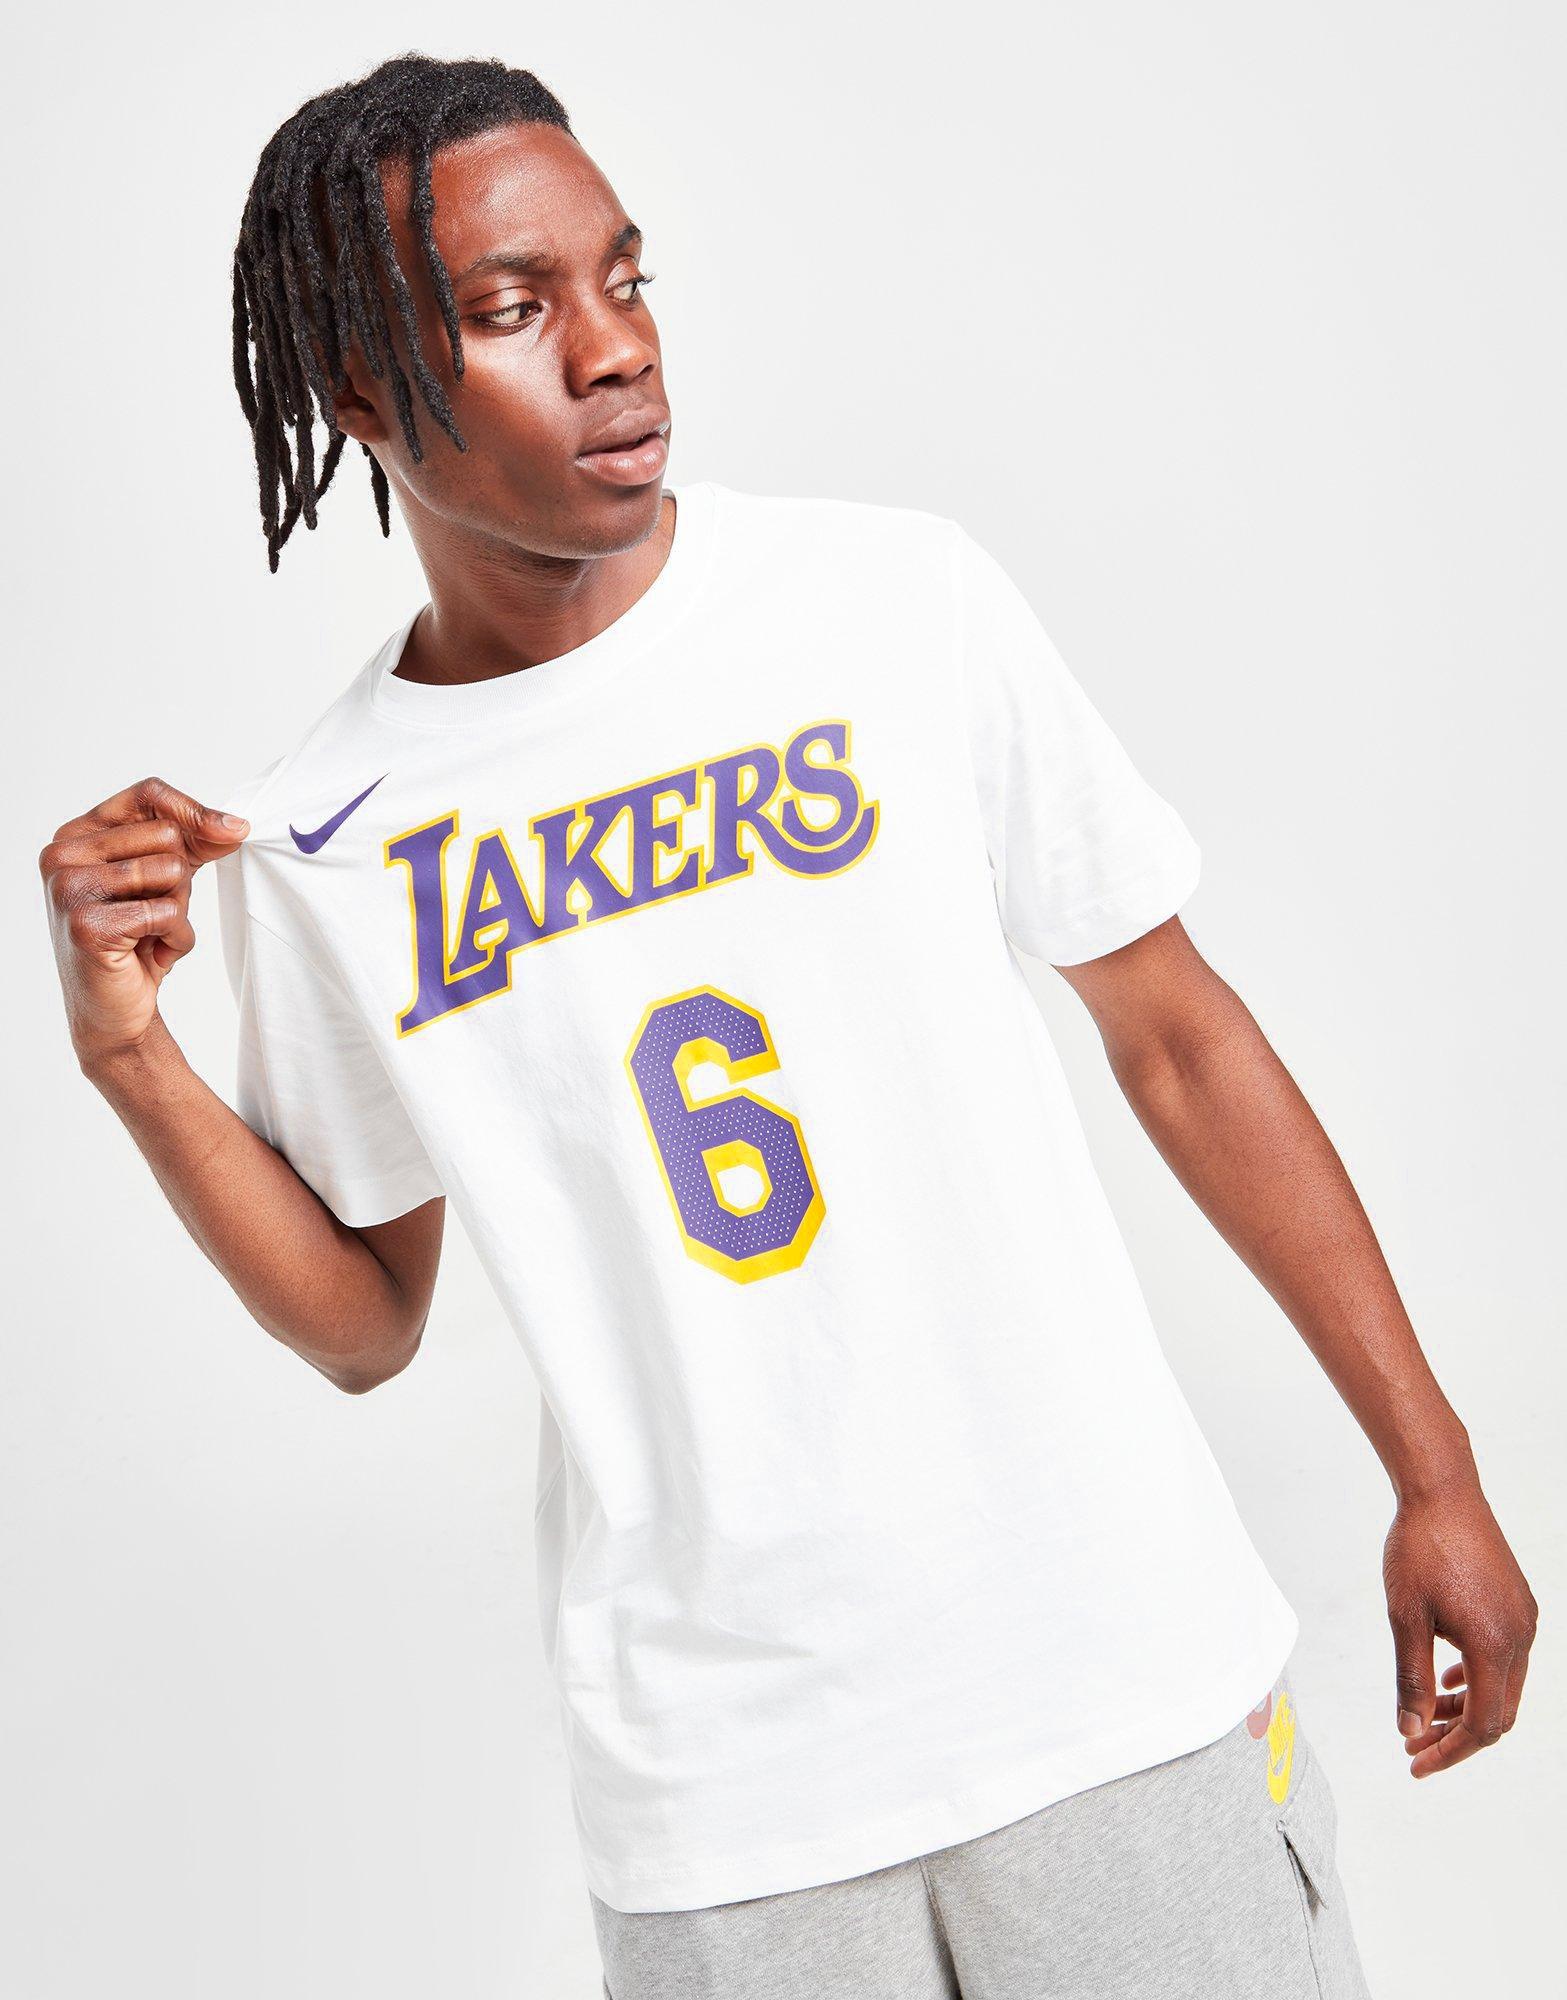 Unisex Nike LeBron James Purple Los Angeles Lakers Select Series Swingman Jersey Size: Extra Large